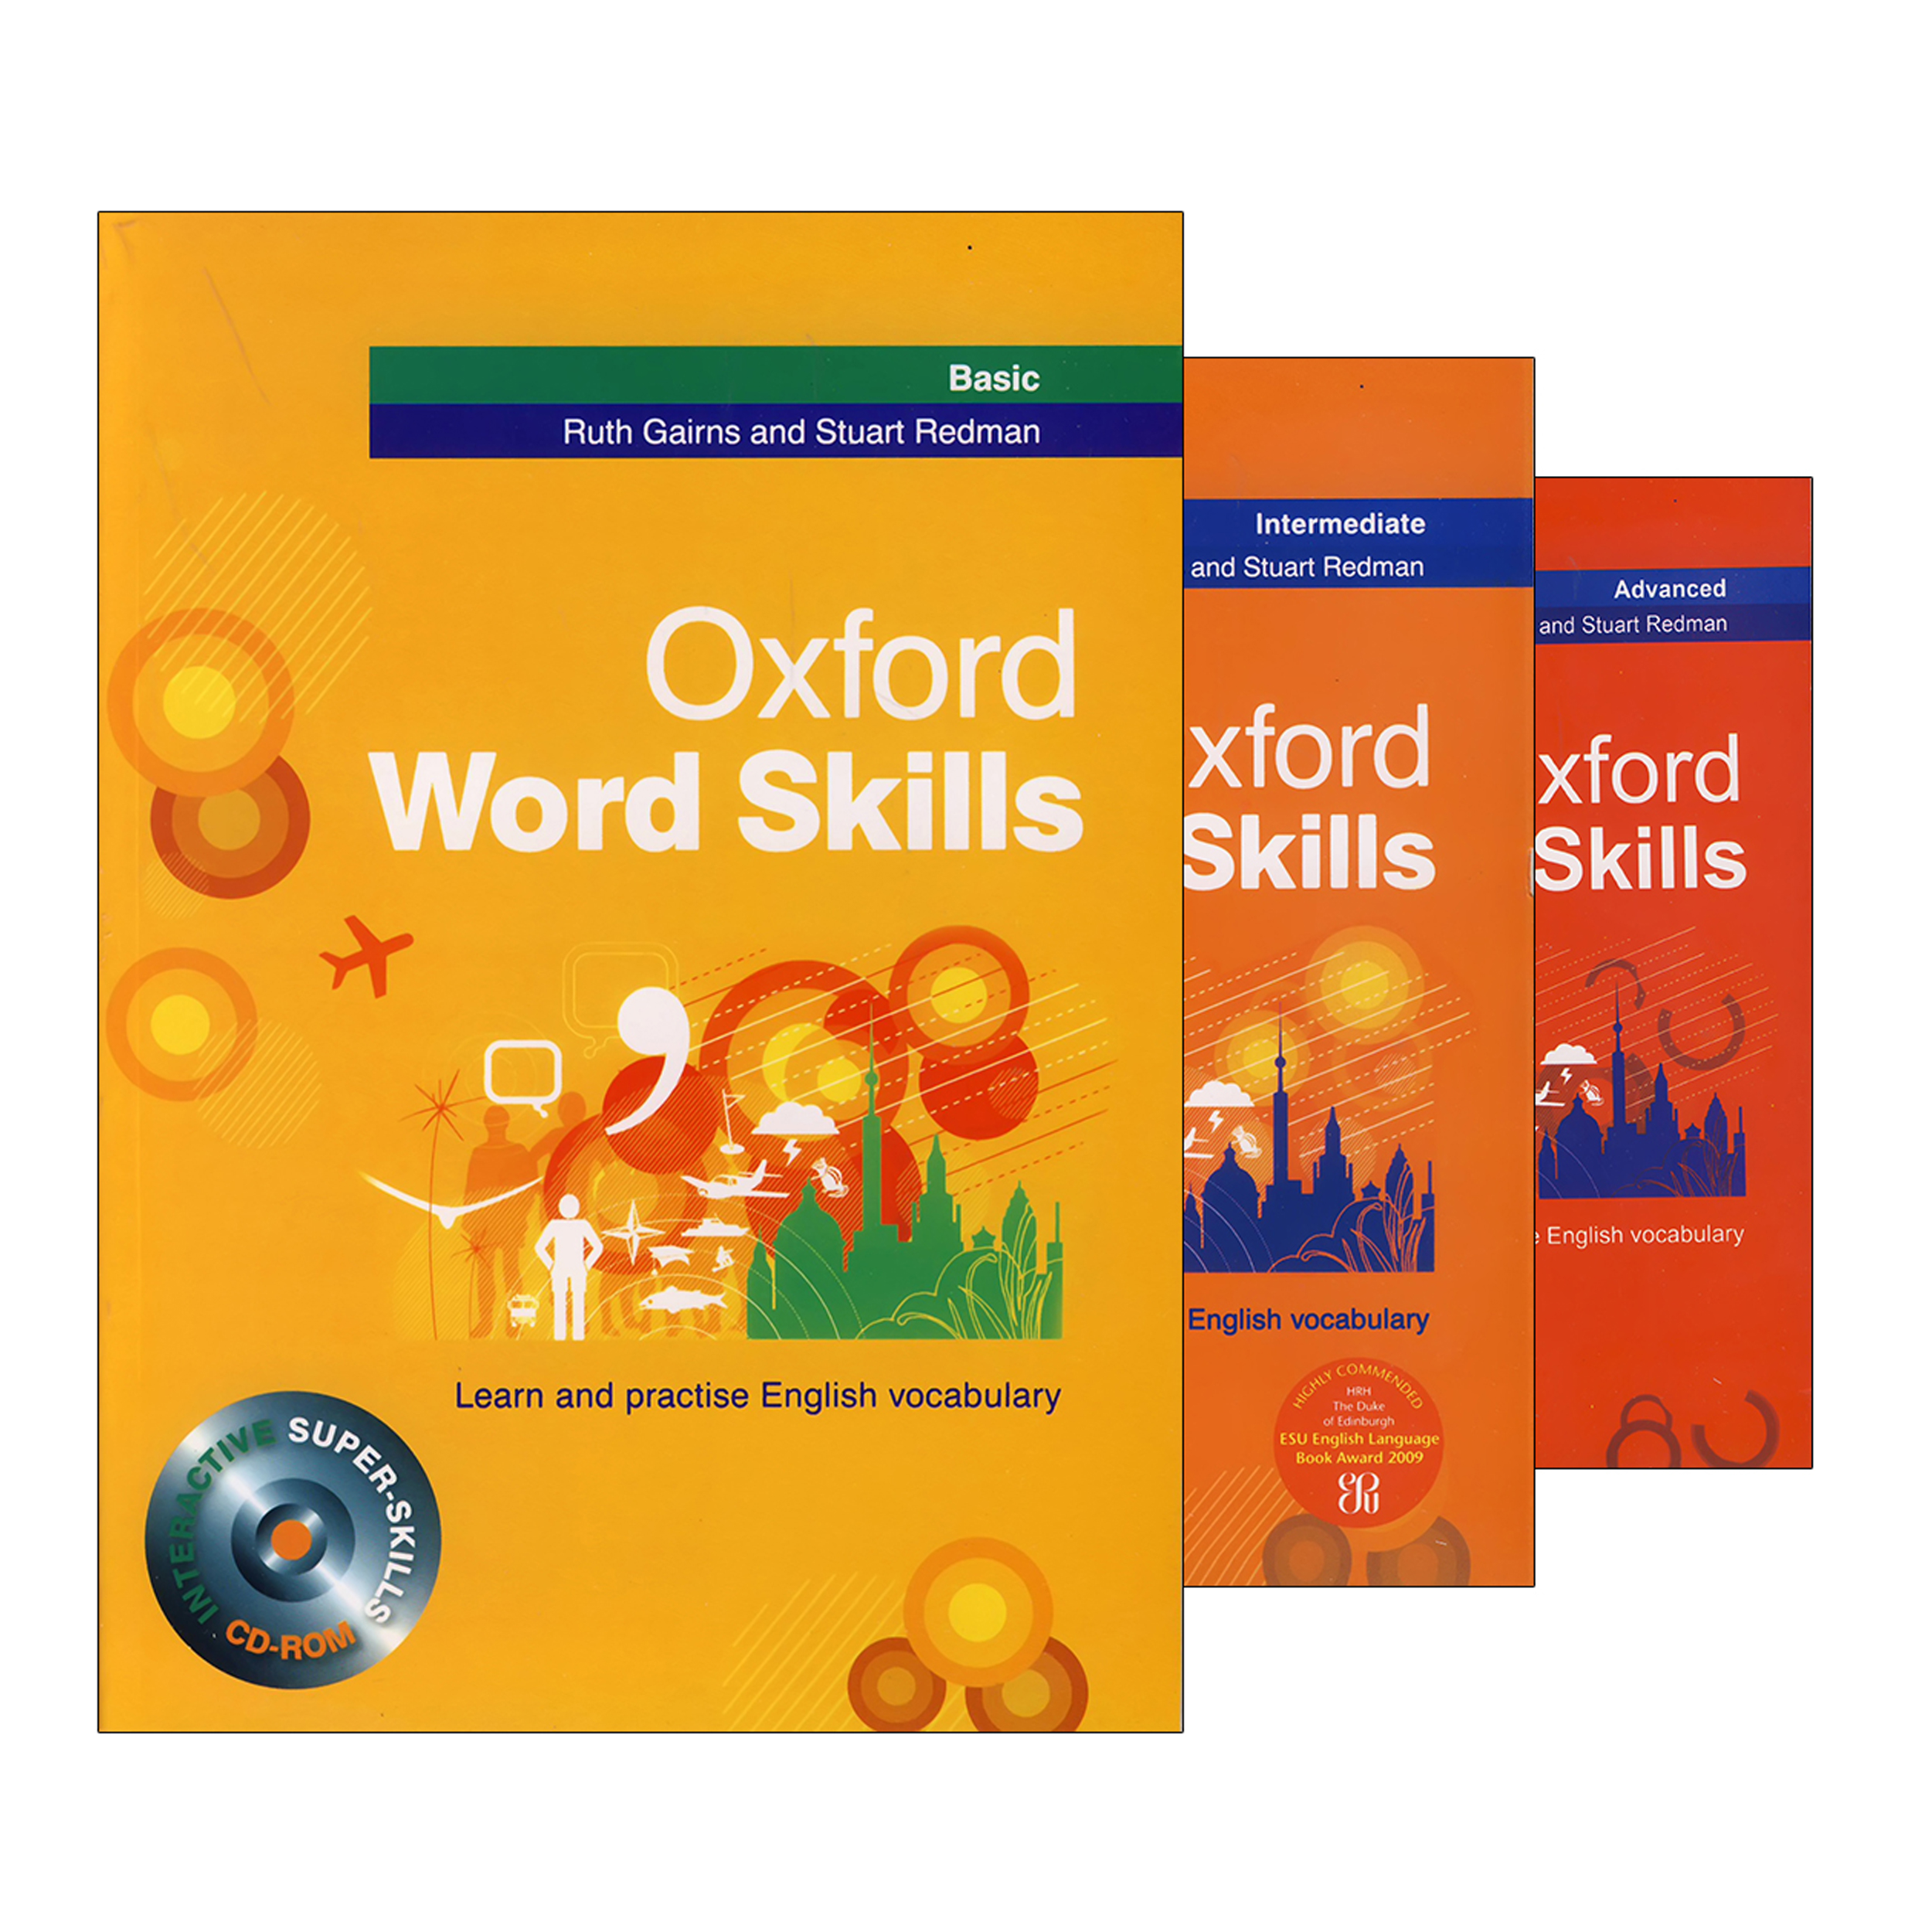 کتاب Oxford Word Skills اثر Ruth Gairns and Stuart Redman انتشارات هدف نوین 3 جلدی